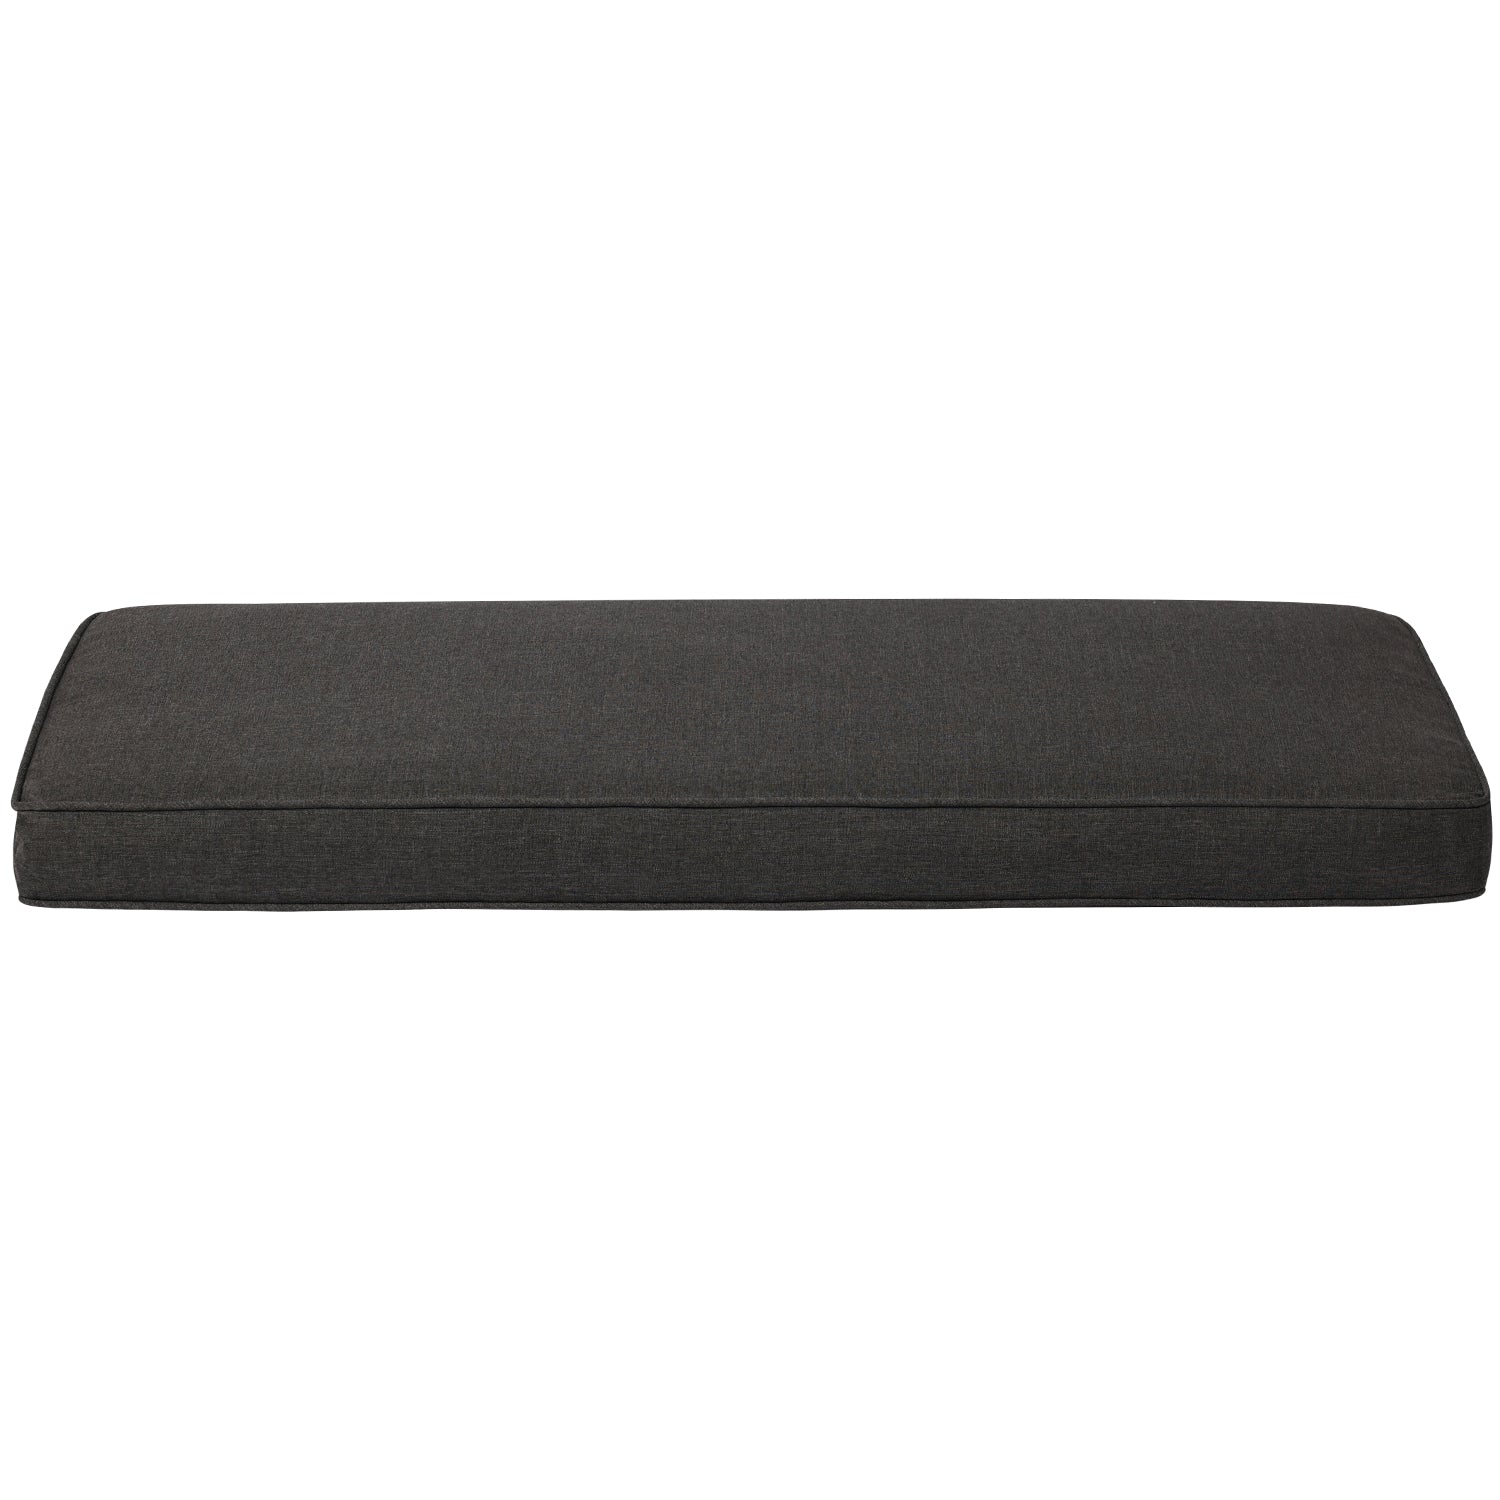 Patio Bench Cushion 46.5” x 17.5” x 3” CUSHION Aoodor Blackish Green  